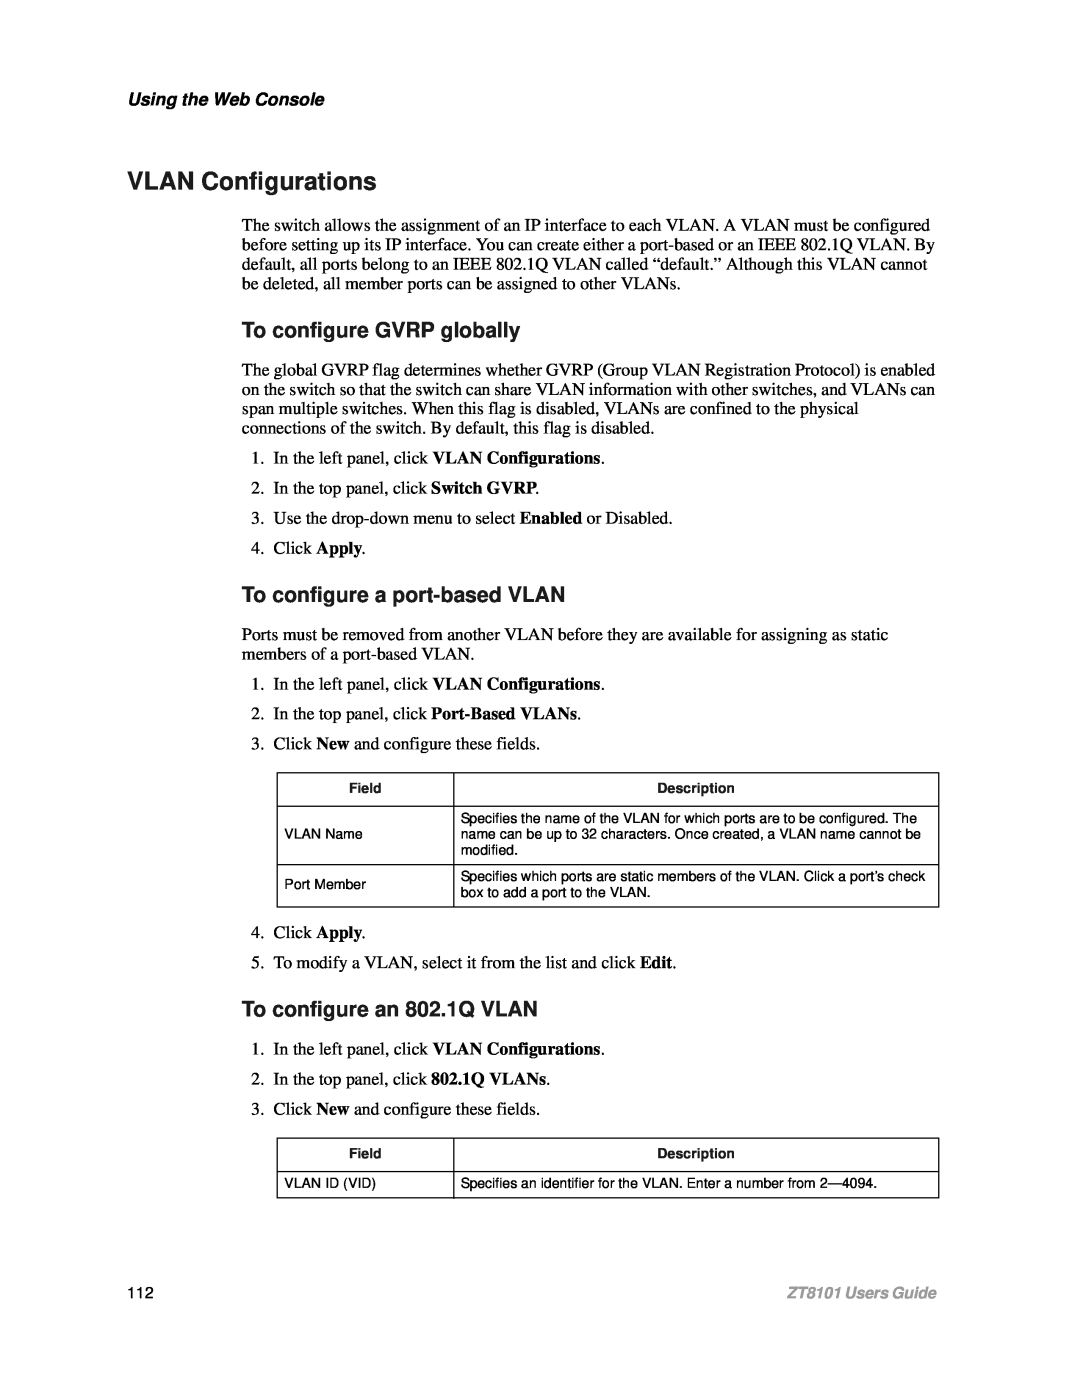 Intel ZT8101 VLAN Configurations, To configure a port-basedVLAN, To configure an 802.1Q VLAN, To configure GVRP globally 